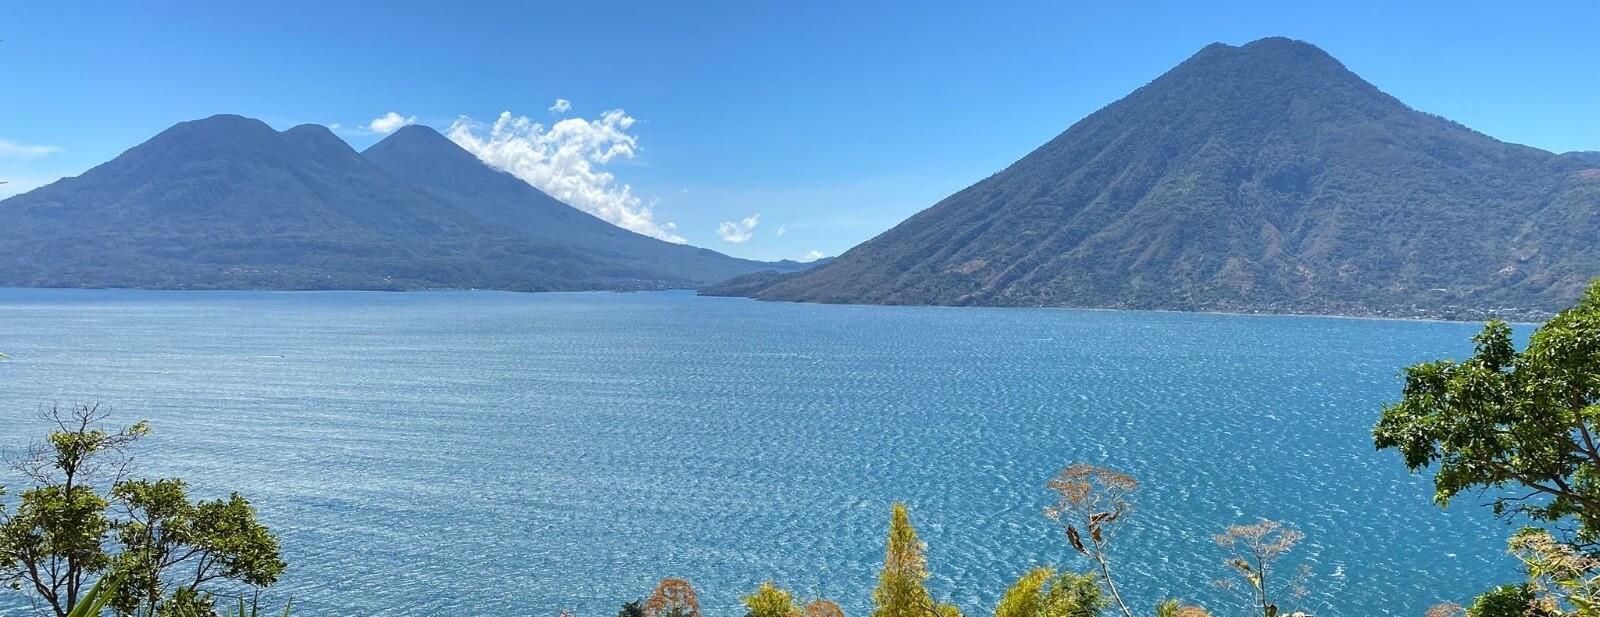 The Crescent plot in Lago de Atitlan in Guatemala